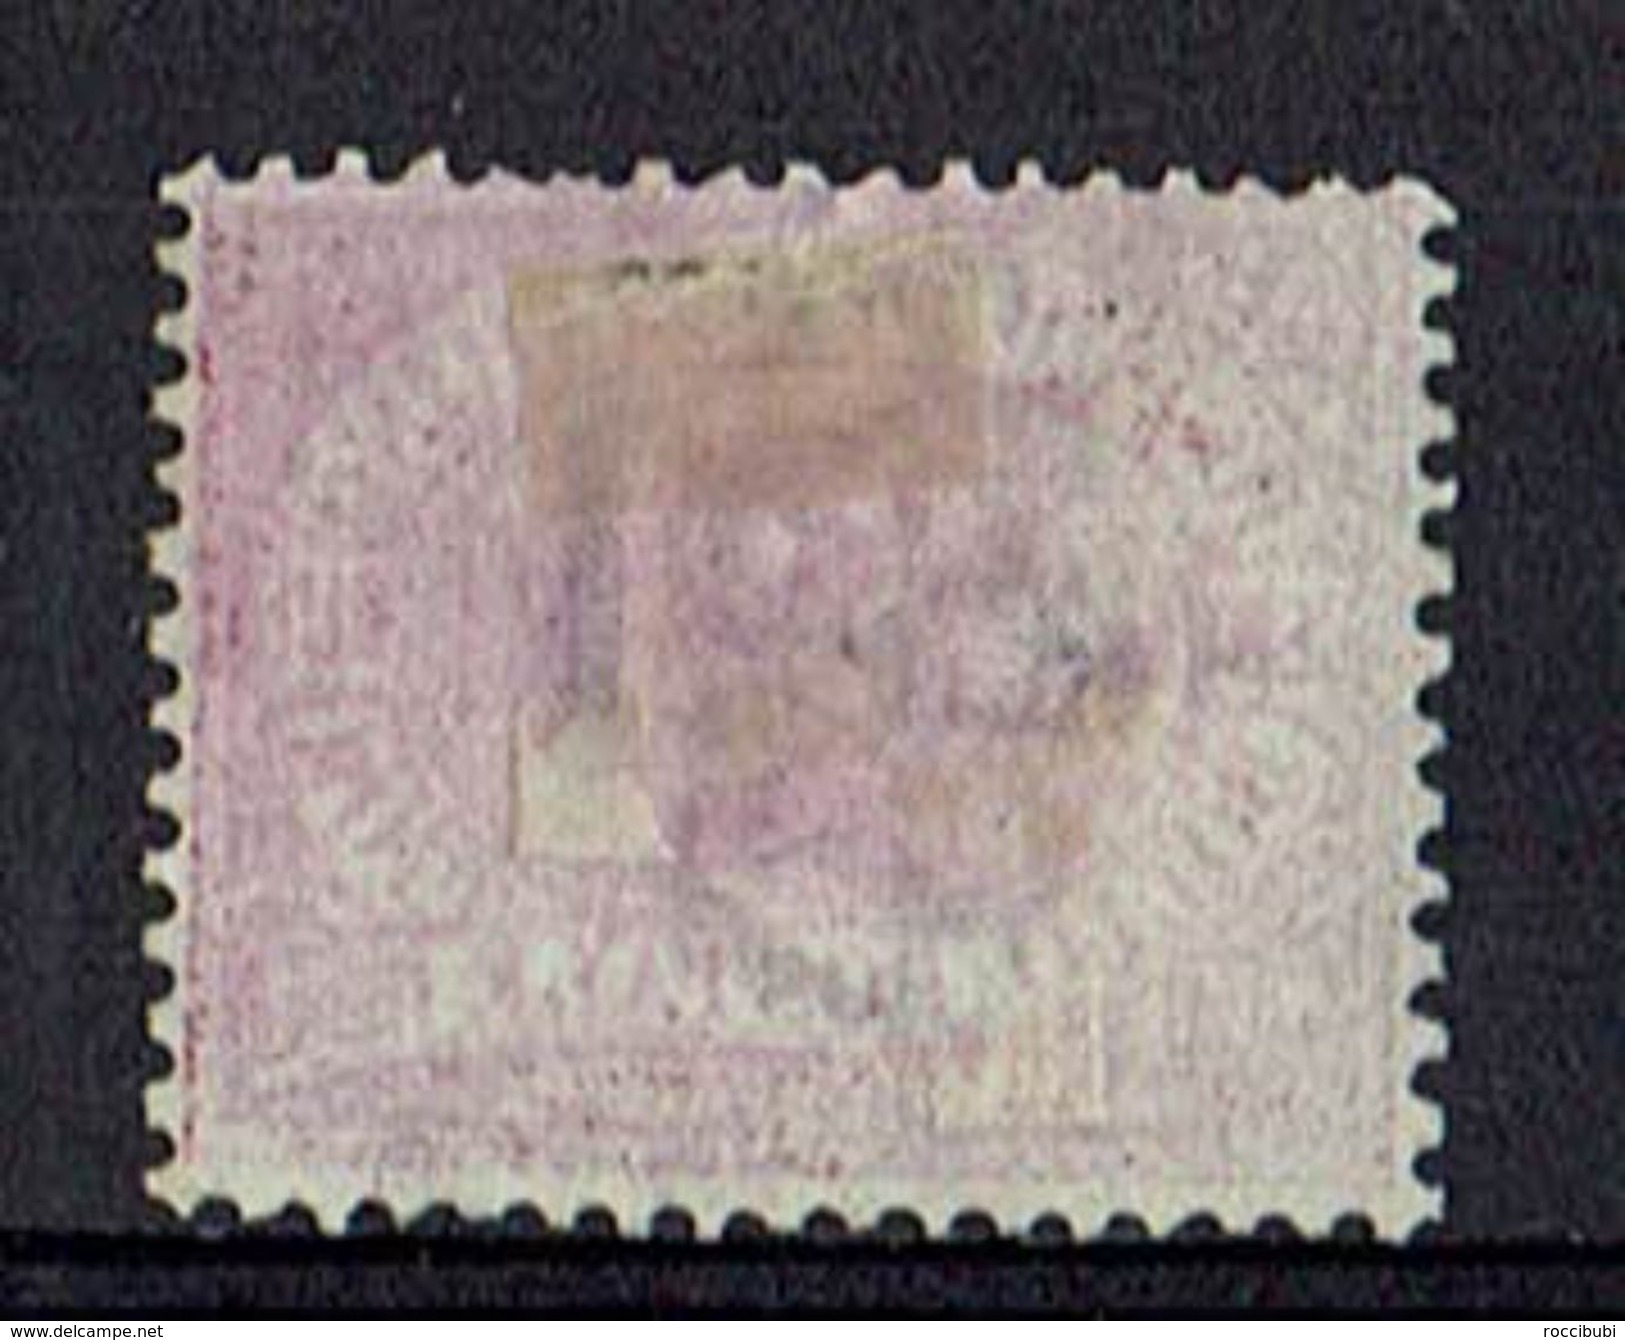 San Marino 1894/1899 // Michel 26 O (10.573) - Gebraucht